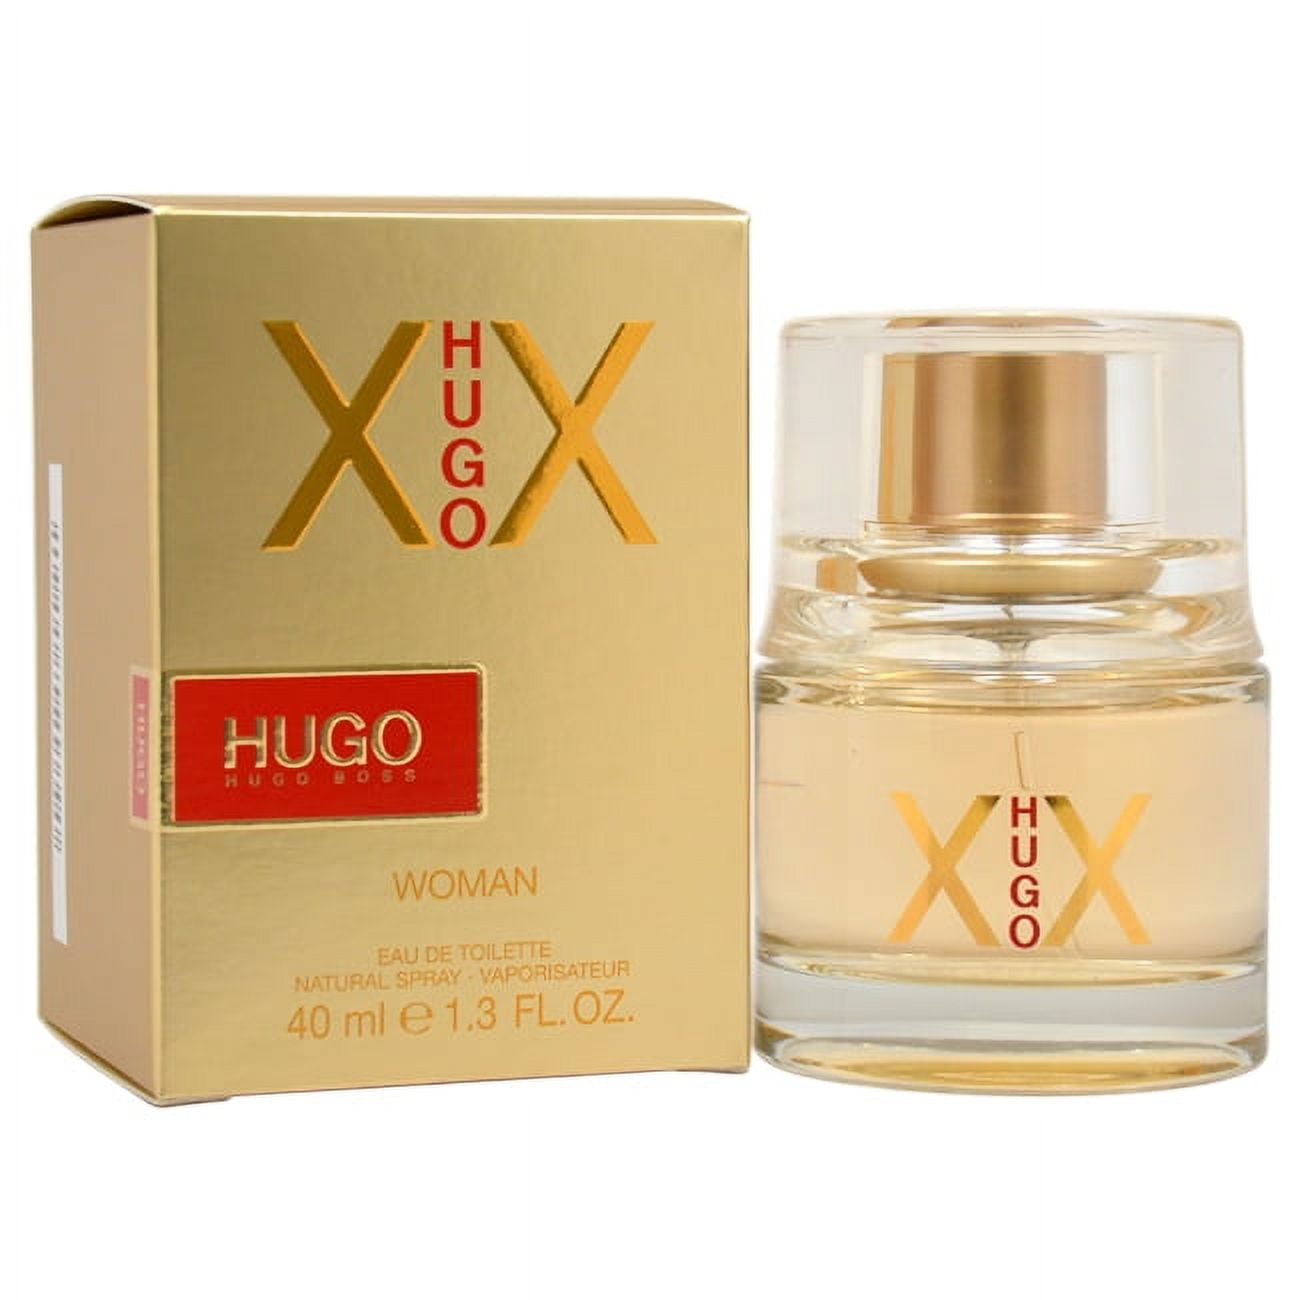 HUGO BOSS Perfume XX Women, 1.3 de Oz Toilette, Eau Hugo for